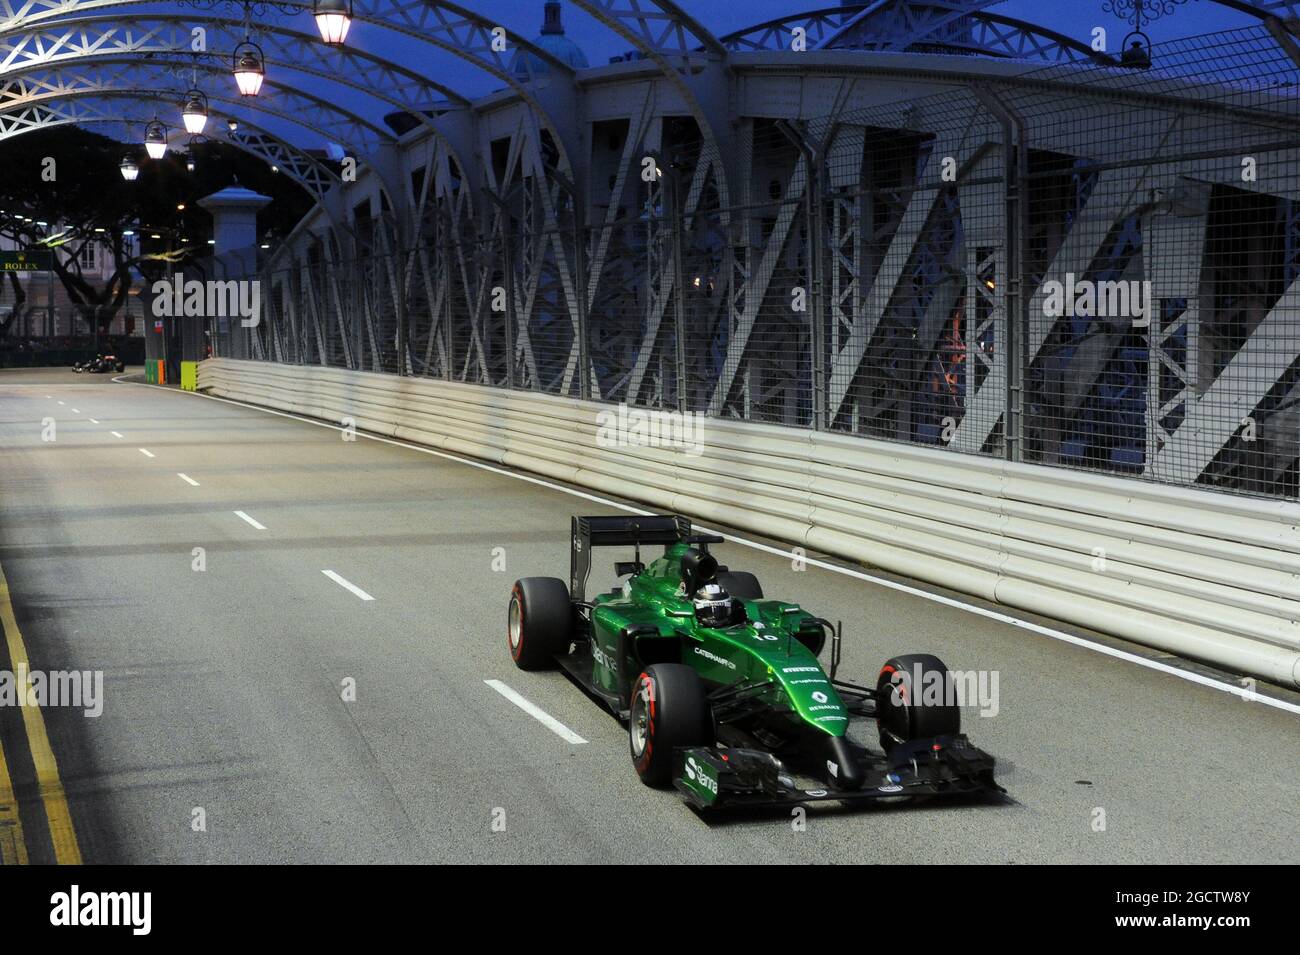 Kamui Kobayashi (JPN) Caterham CT05. Gran Premio di Singapore, sabato 20 settembre 2014. Circuito Marina Bay Street, Singapore. Foto Stock